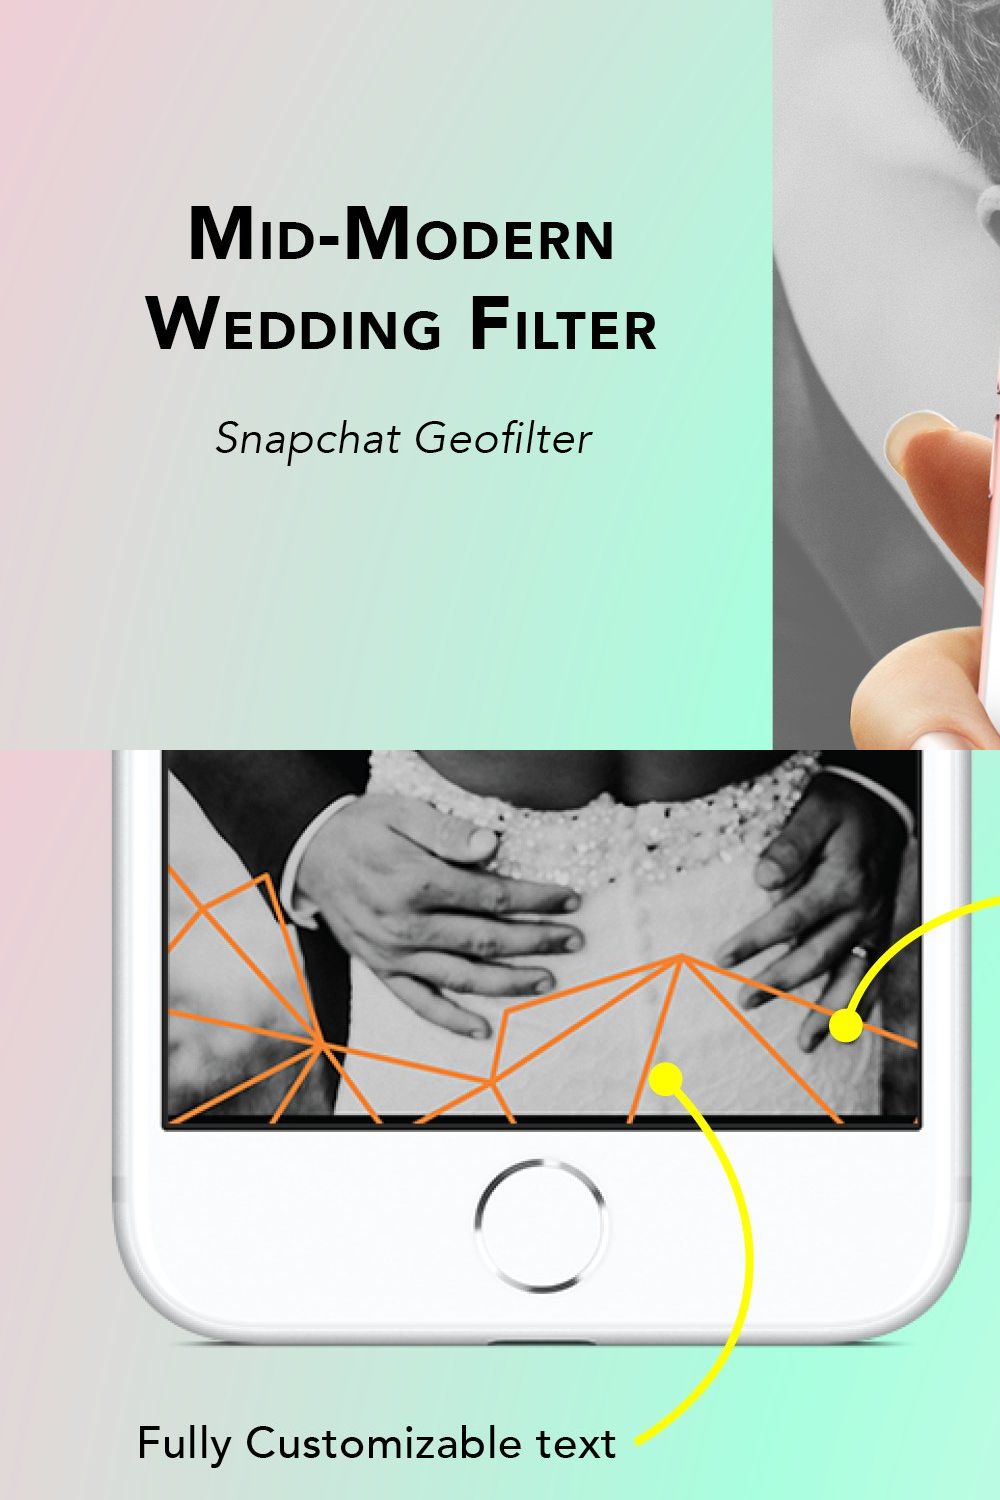 Mid-Modern Wedding Geofilter pinterest preview image.